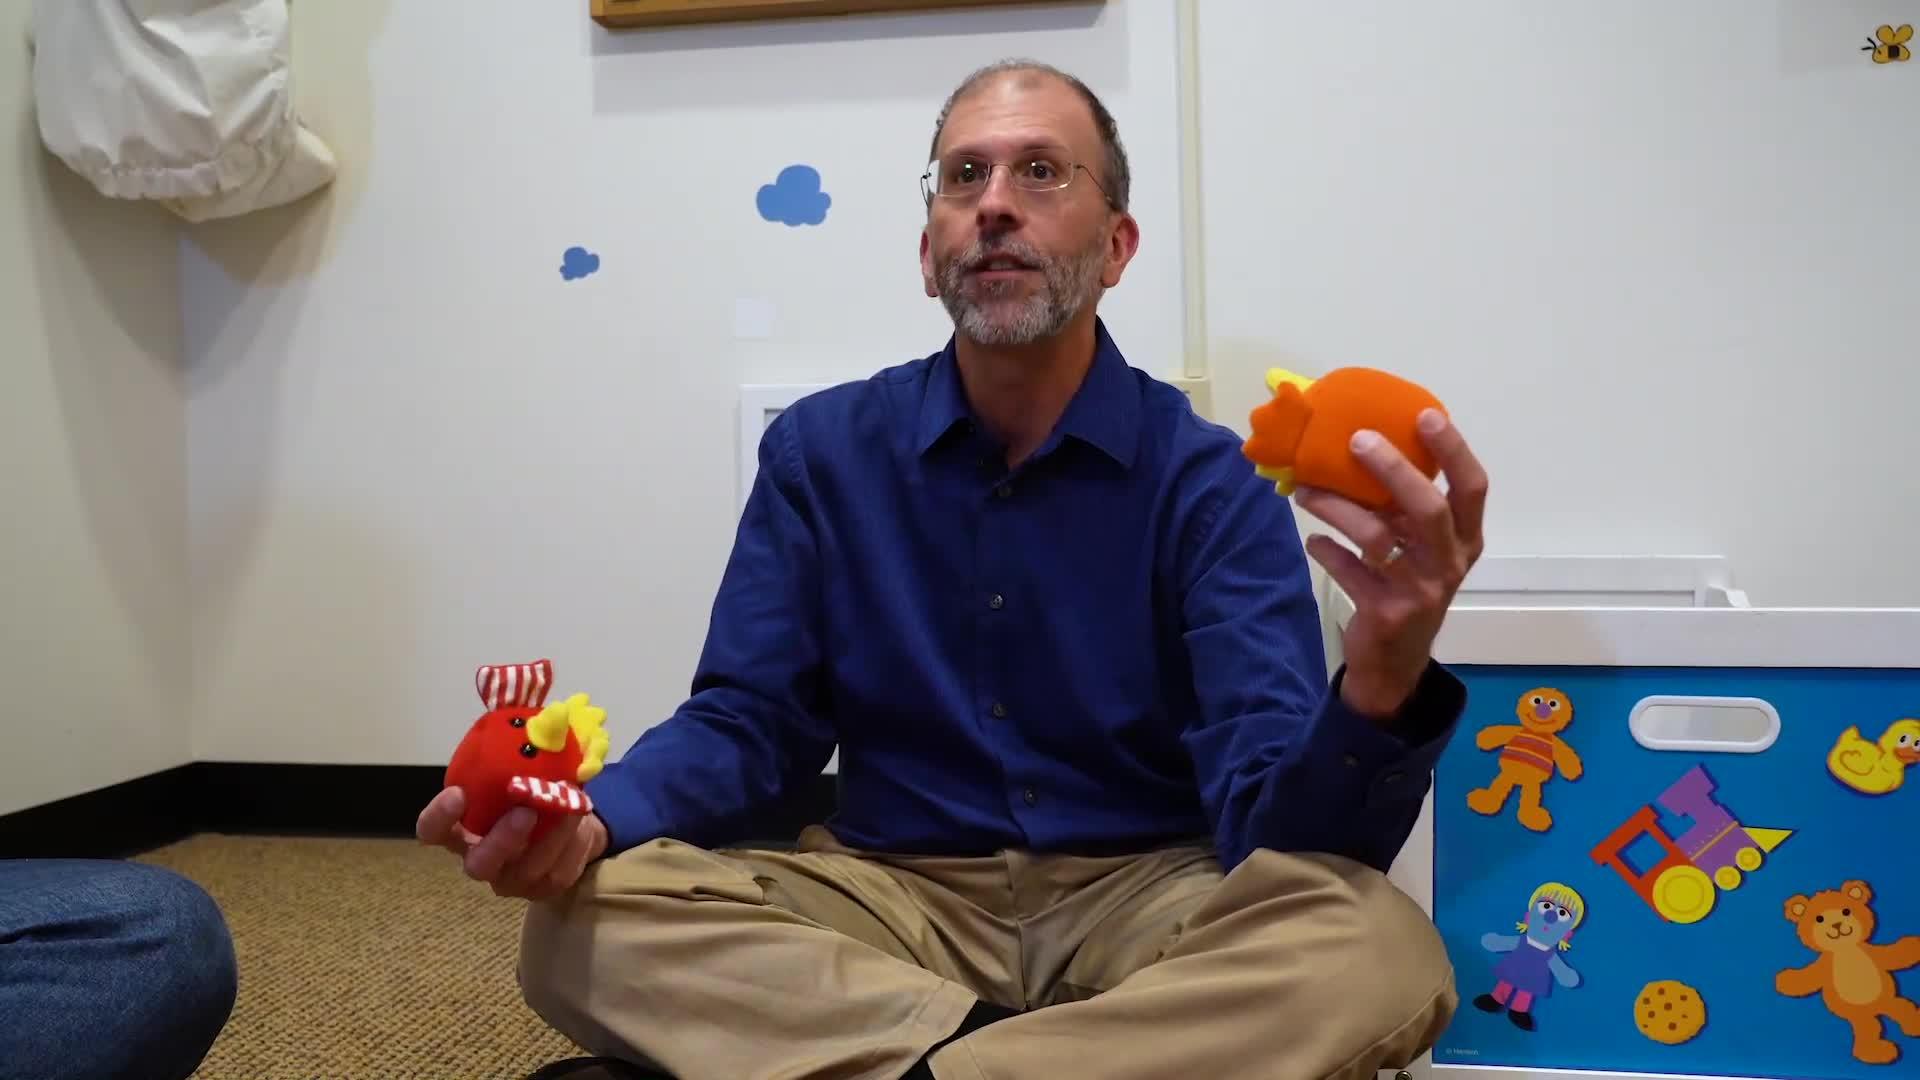 Michael Goldstein sits cross-legged on the floor holding baby toys